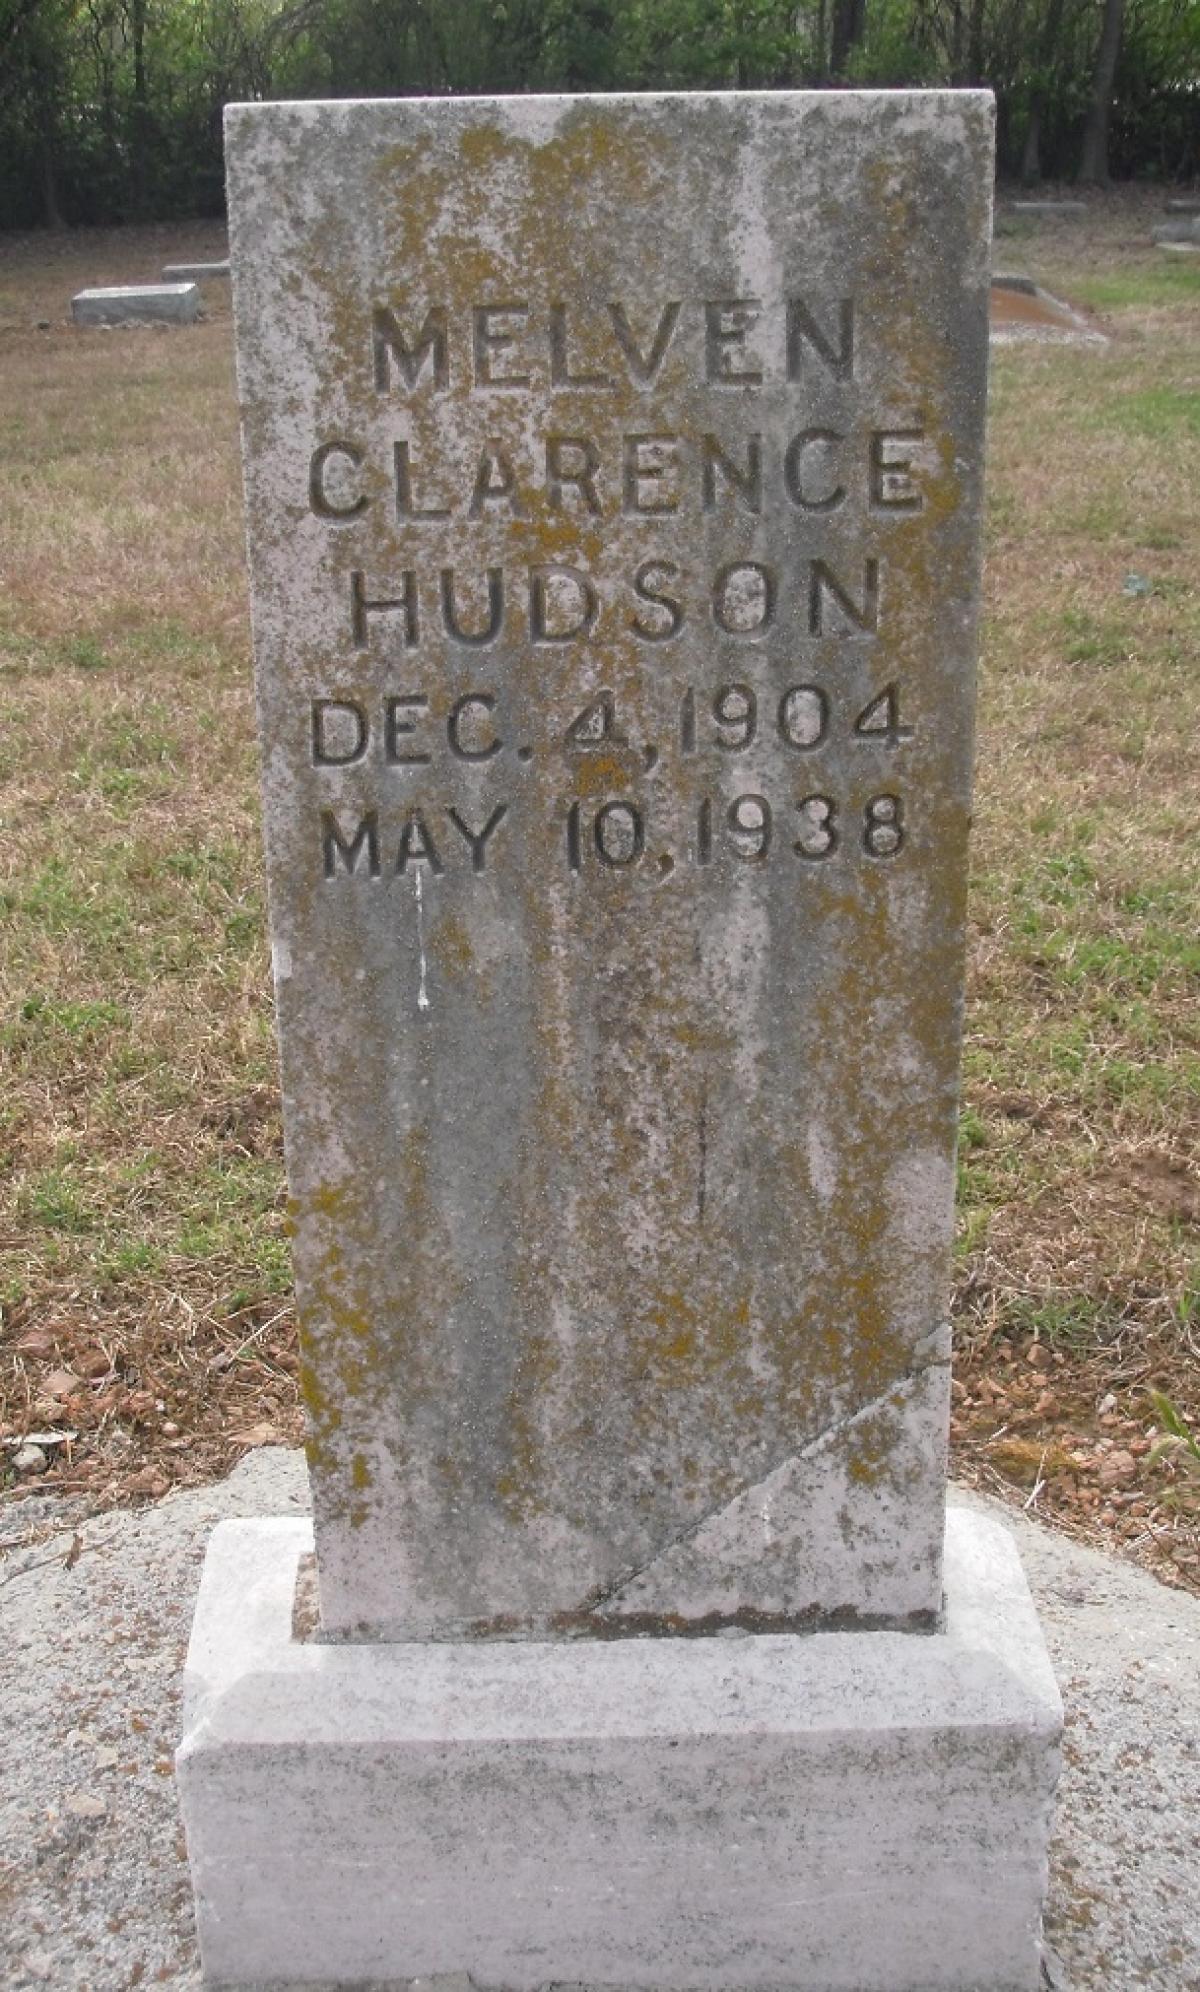 OK, Grove, Olympus Cemetery, Hudson, Melven Clarence Headstone